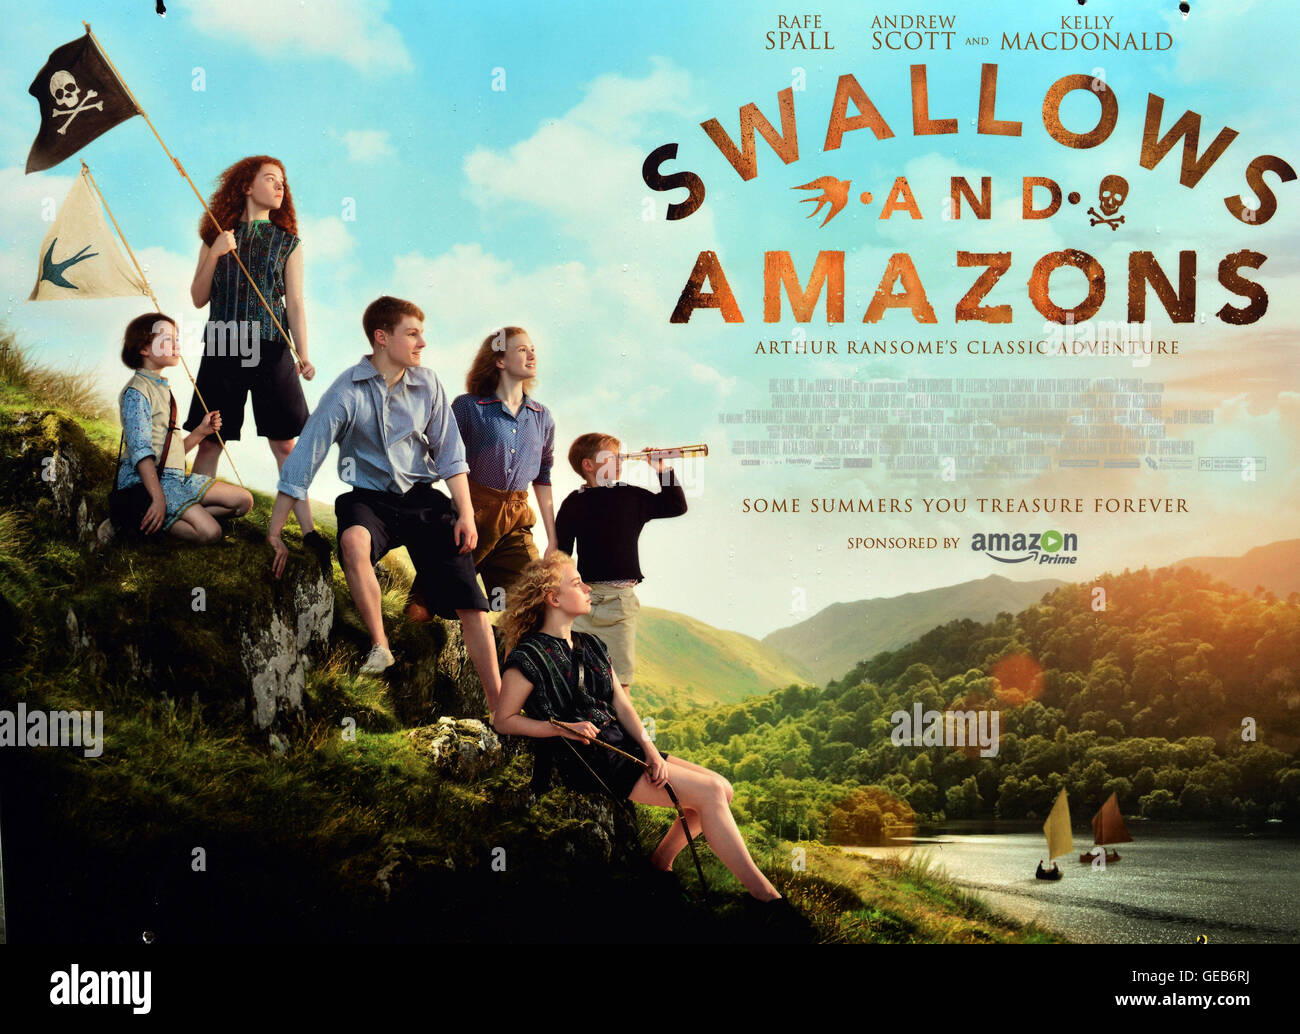 Schwalben und Amazons premiere Plakat am Theater am See in Keswick, Cumbria. Stockfoto